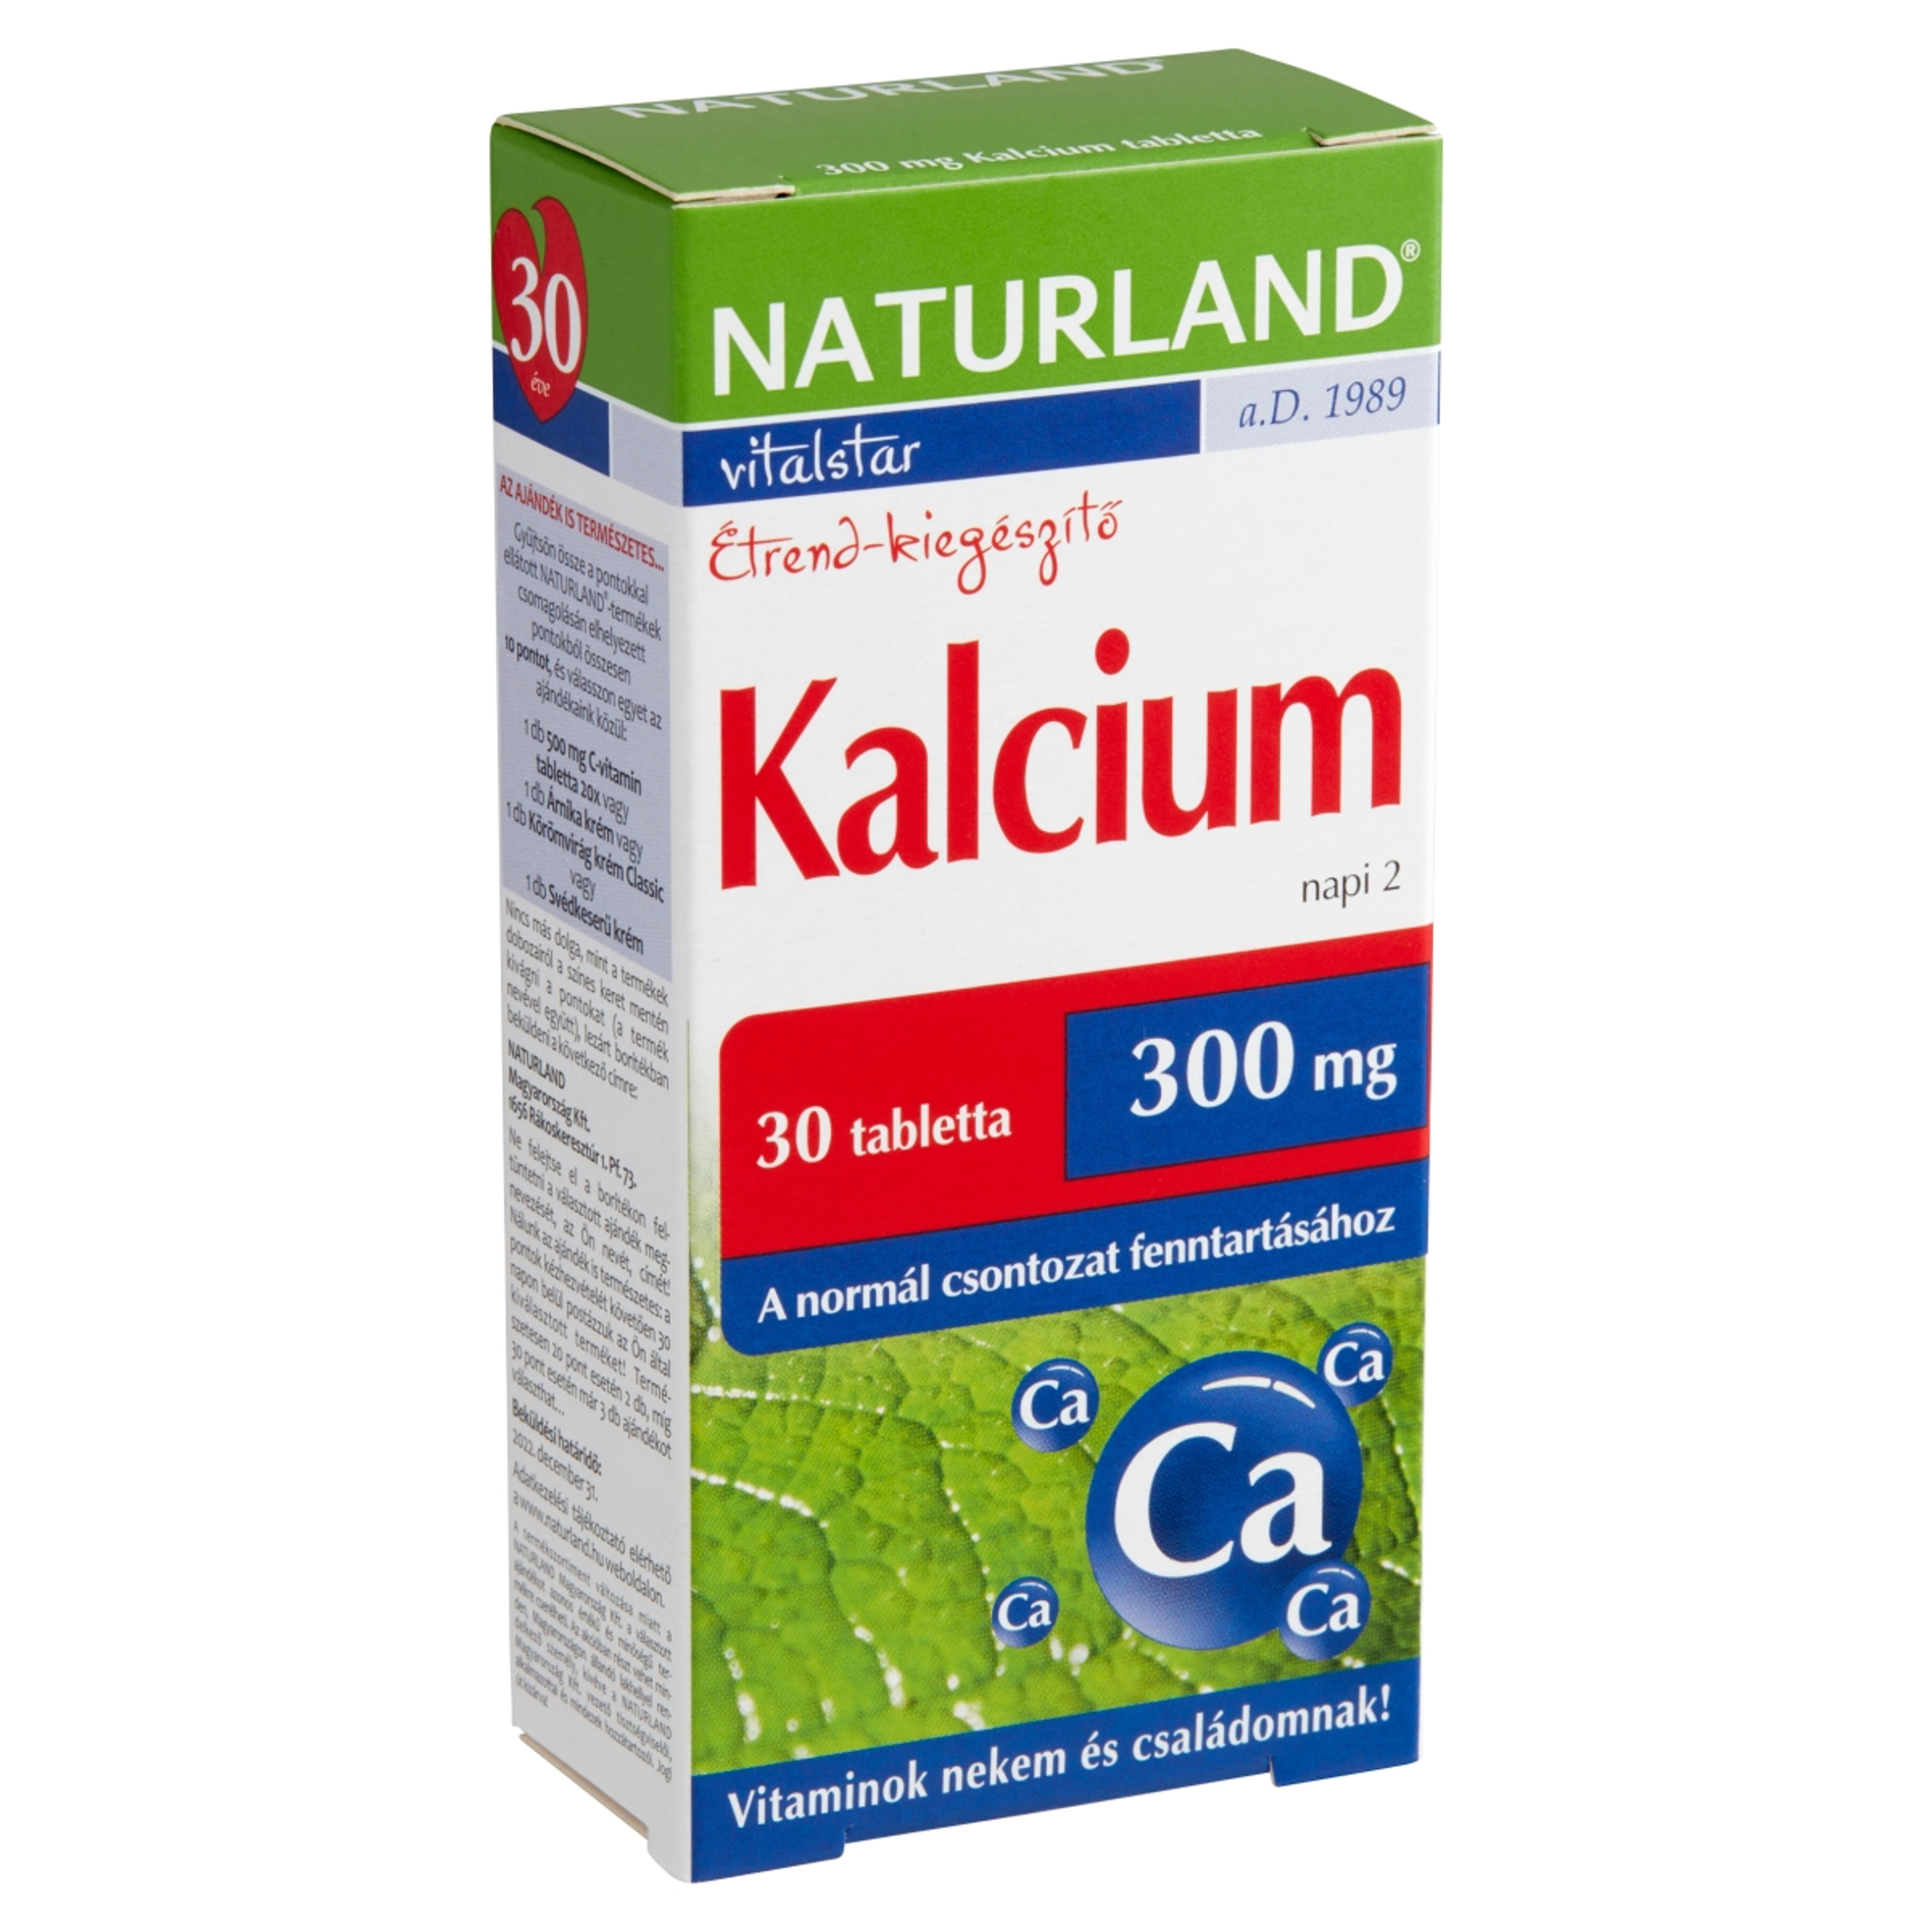 Naturland Kalcium 300mg Tabletta - 30 db-2